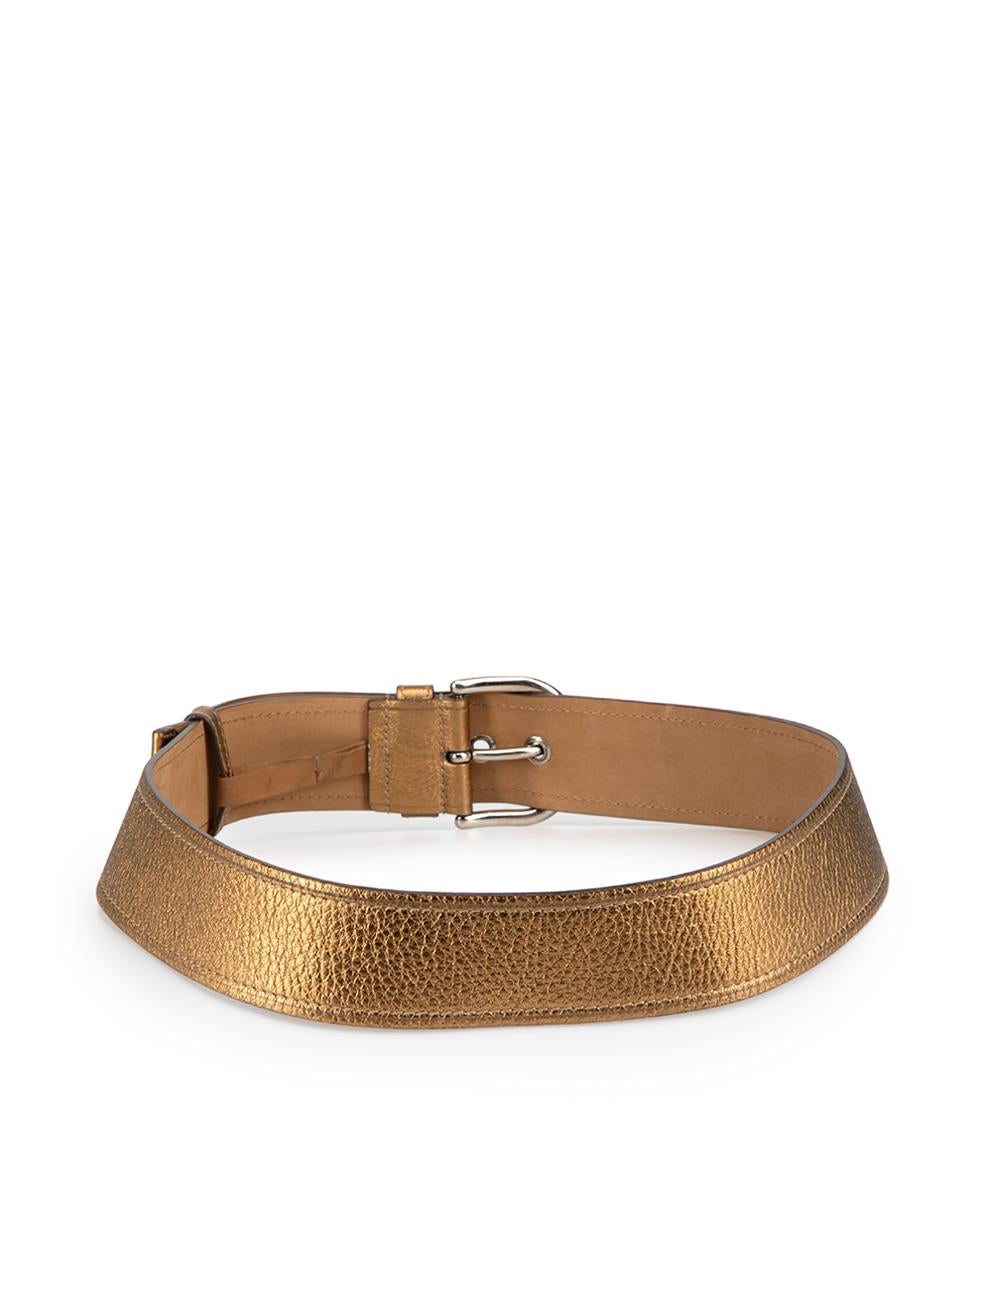 Prada Women's Gold Leather Metallic Belt In Good Condition In London, GB